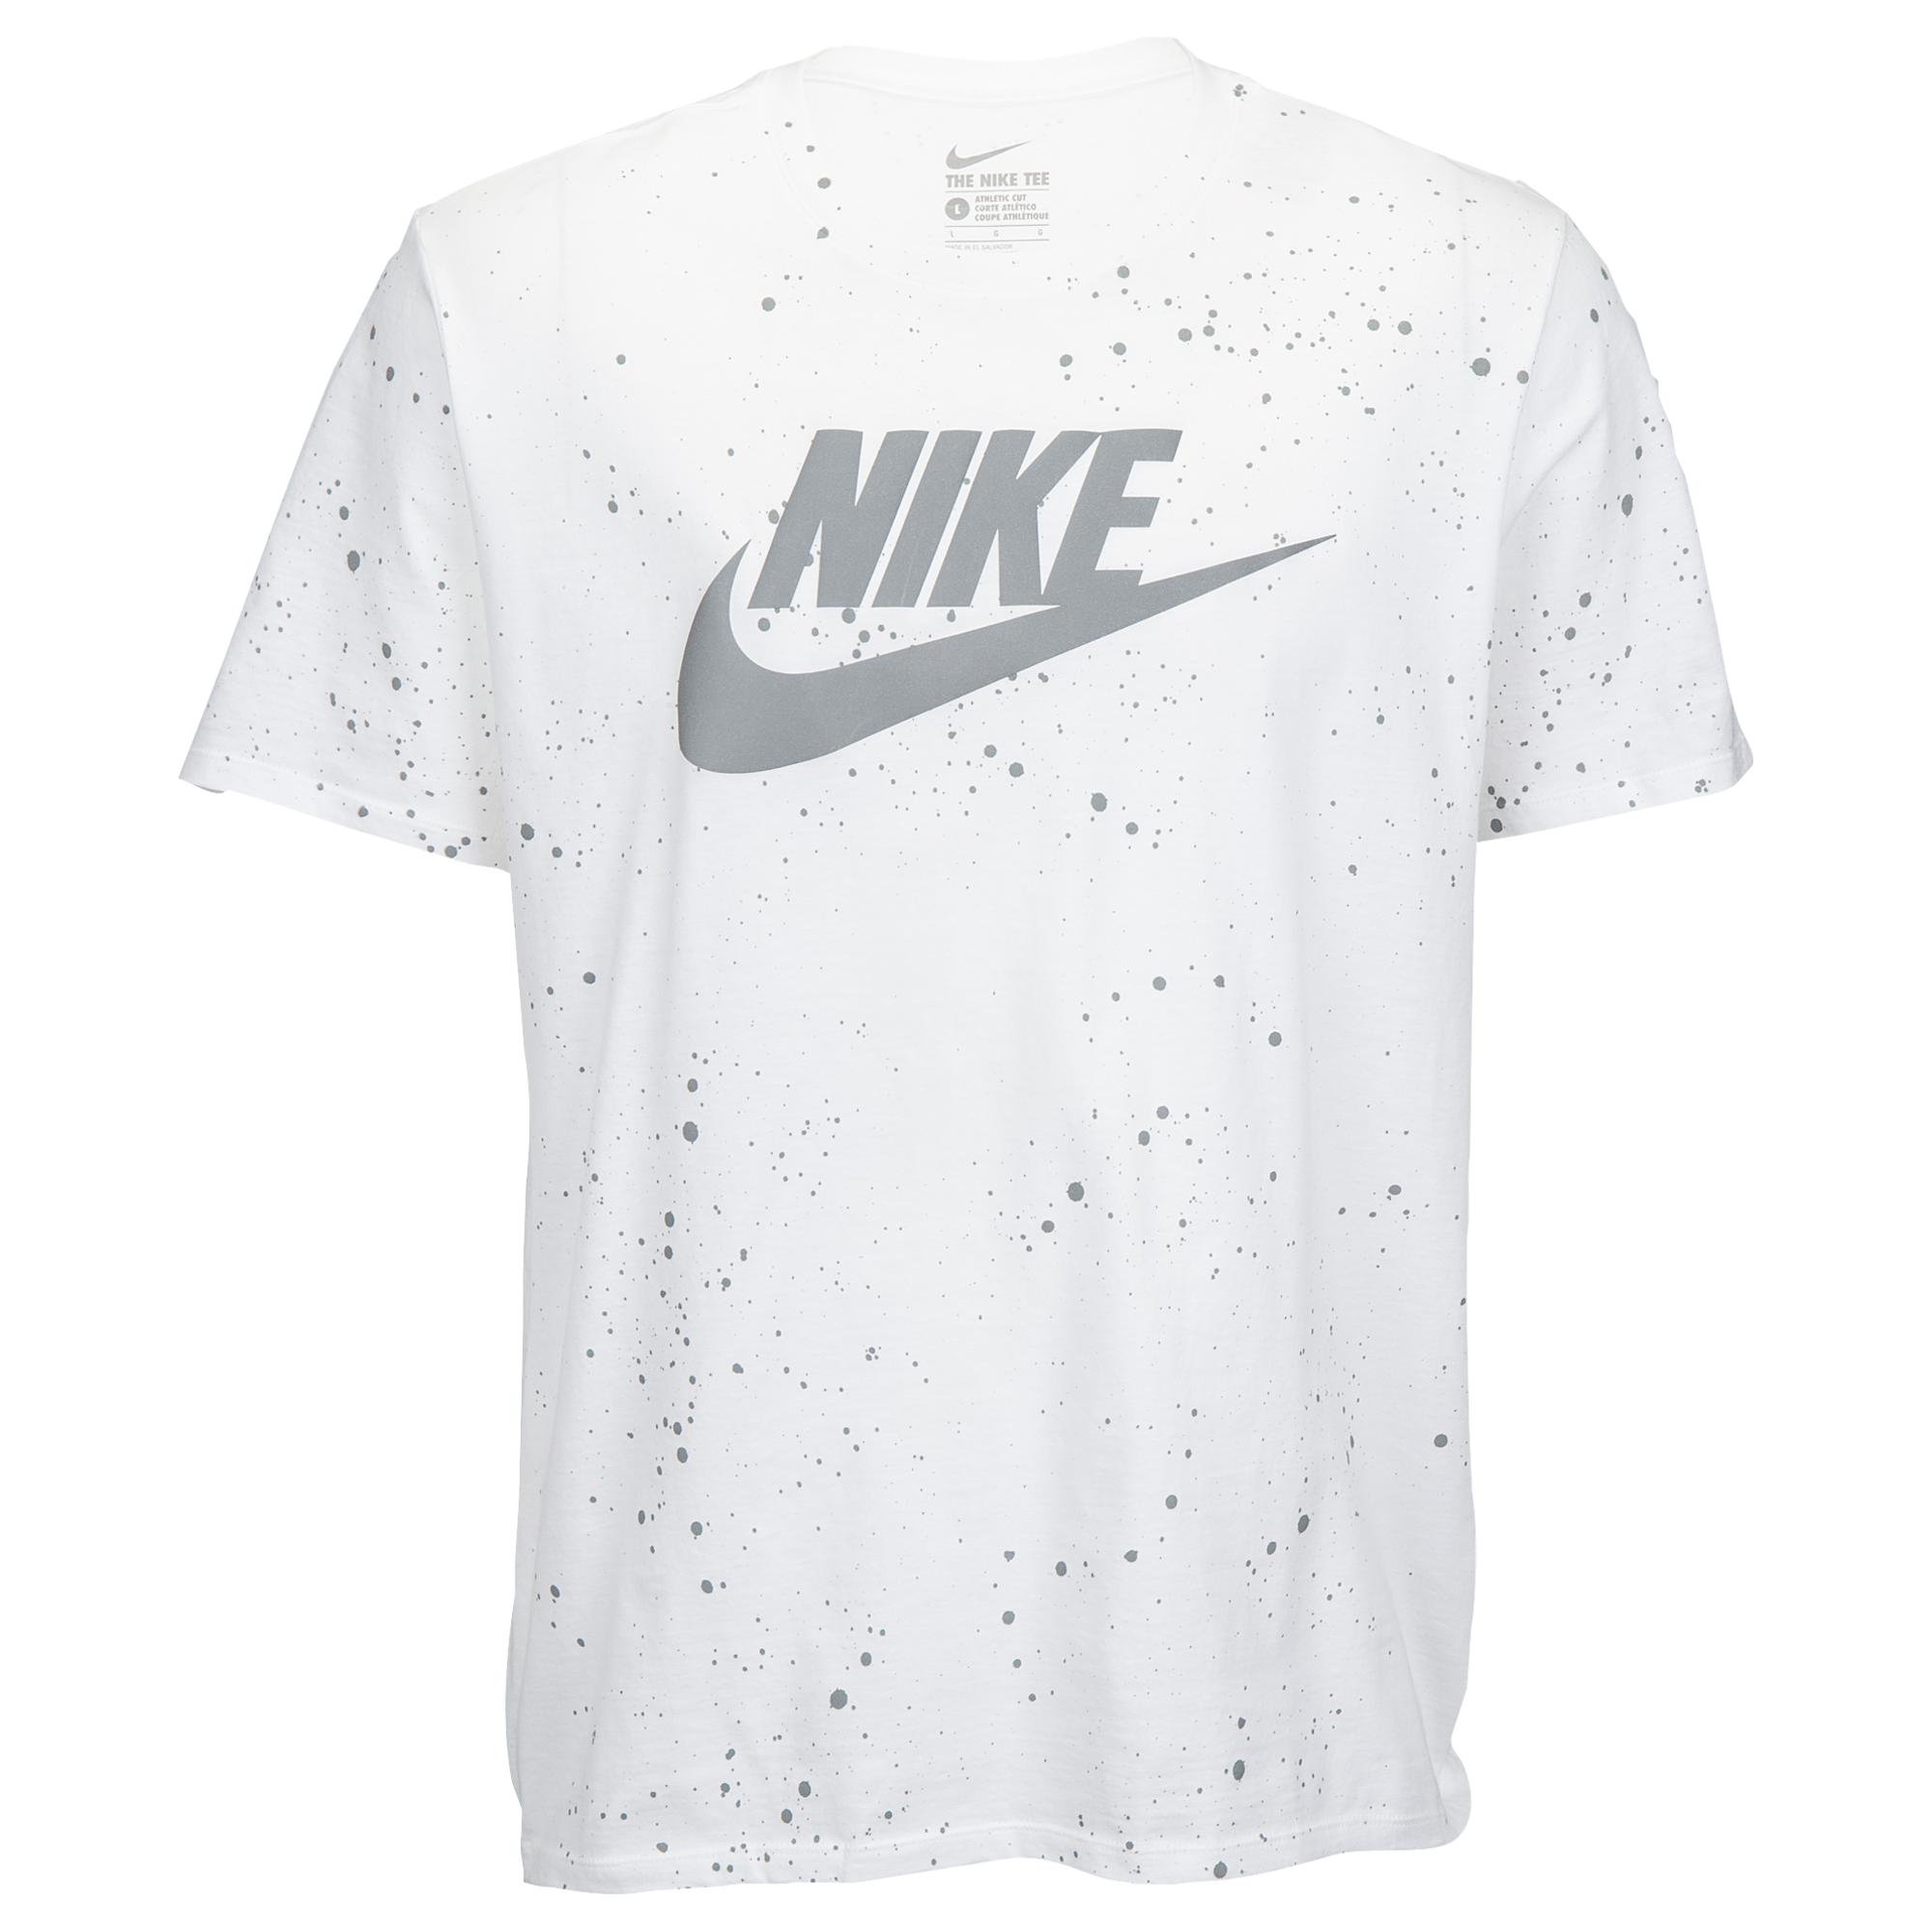 white and gray nike shirt